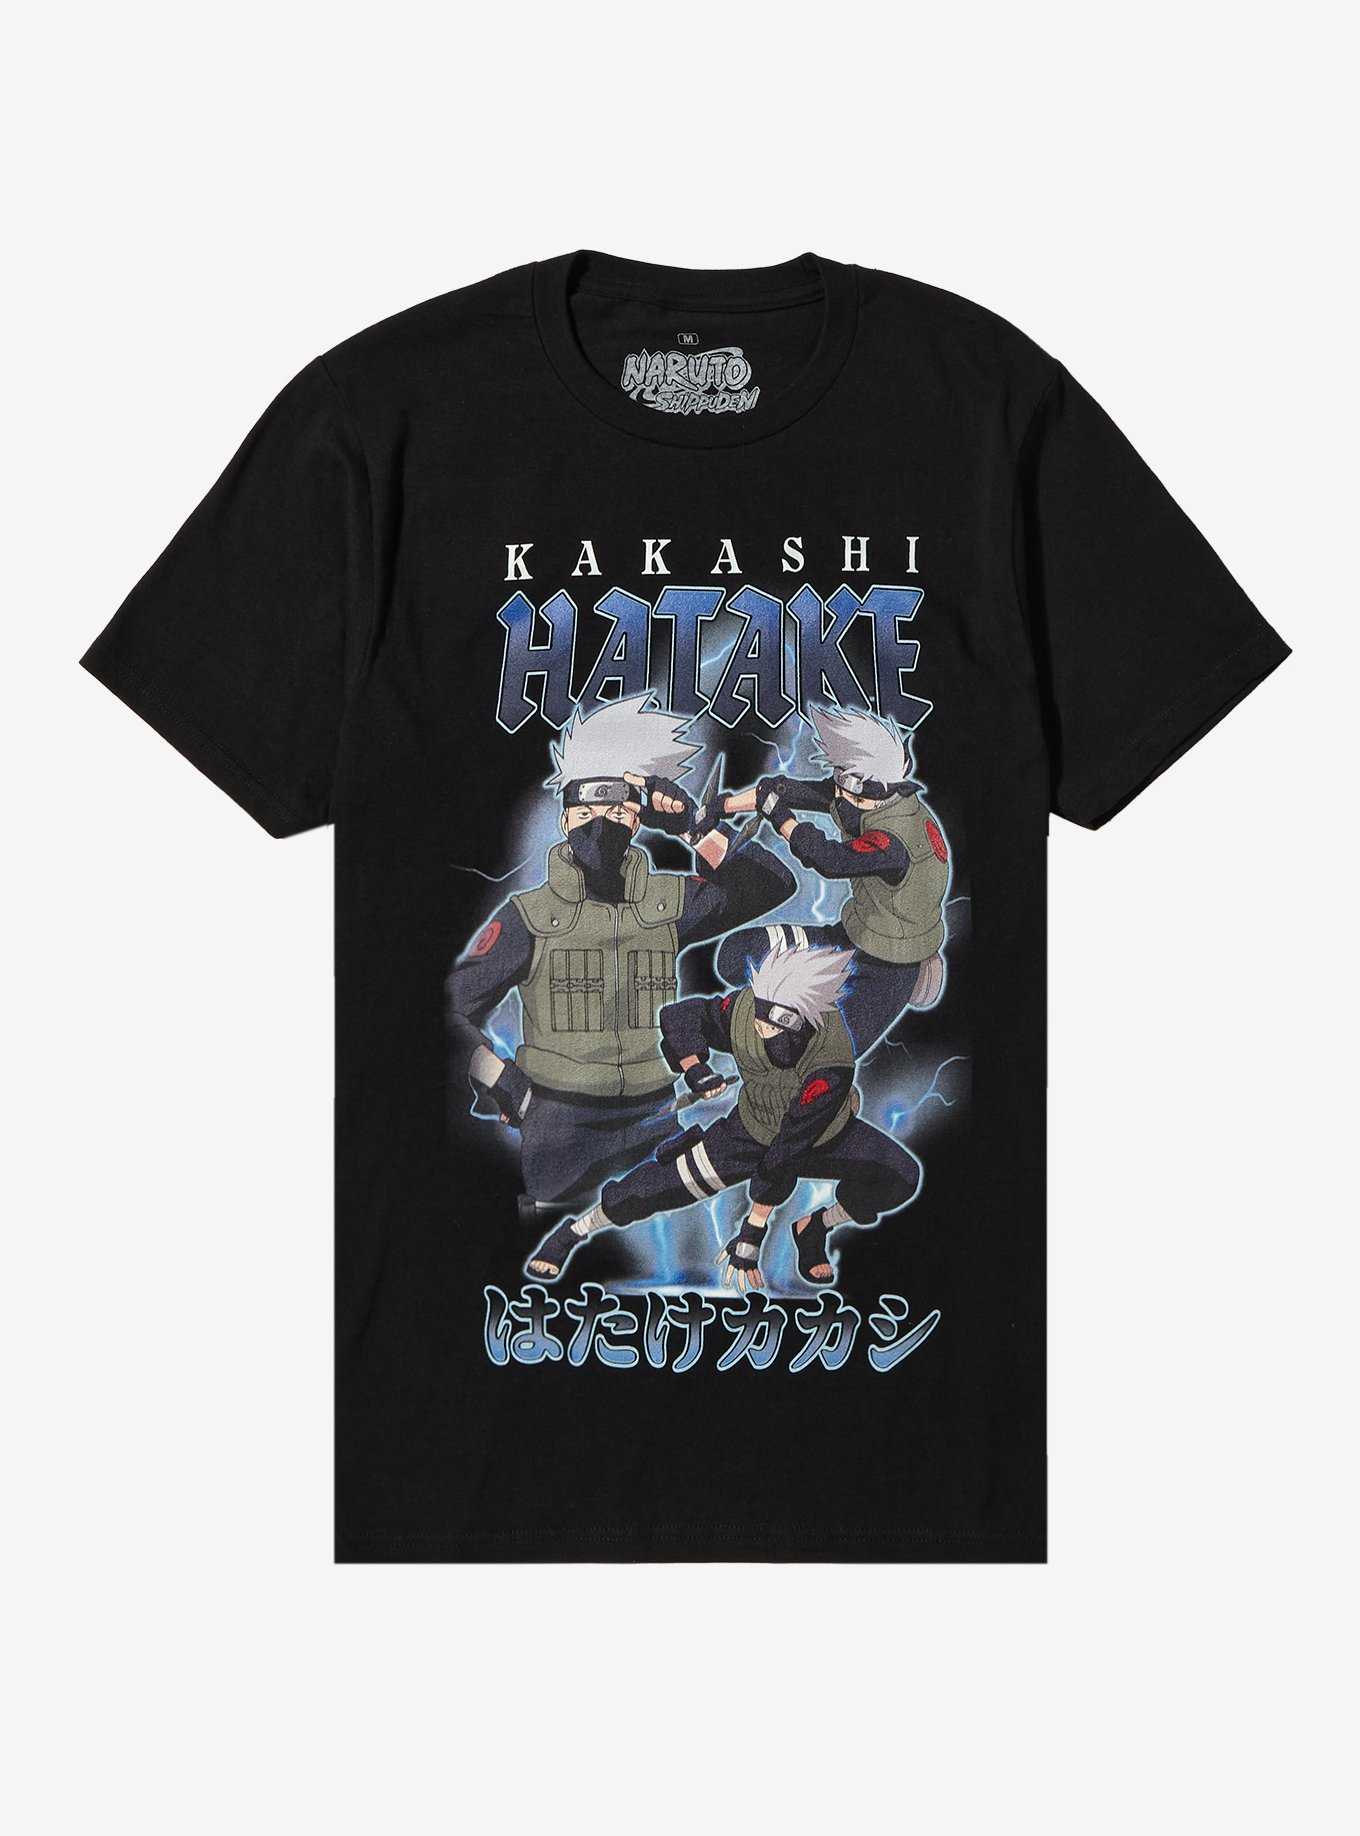 Naruto Shippuden Kakashi Collage Boyfriend Fit Girls T-Shirt, , hi-res